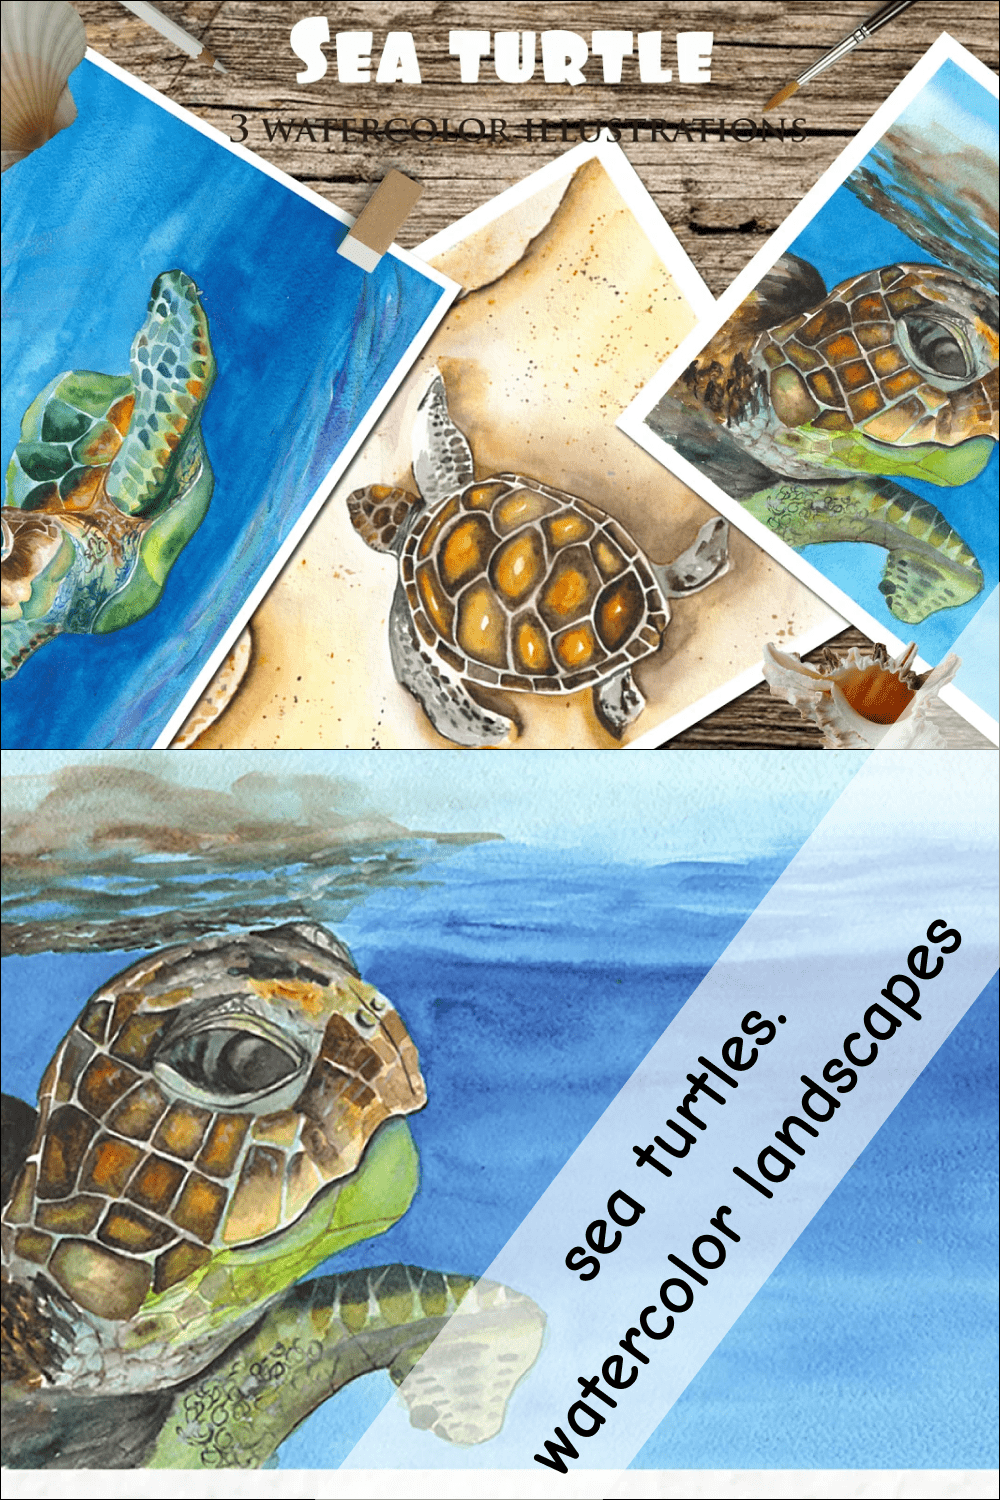 Sea Turtles. Watercolor Landscapes.